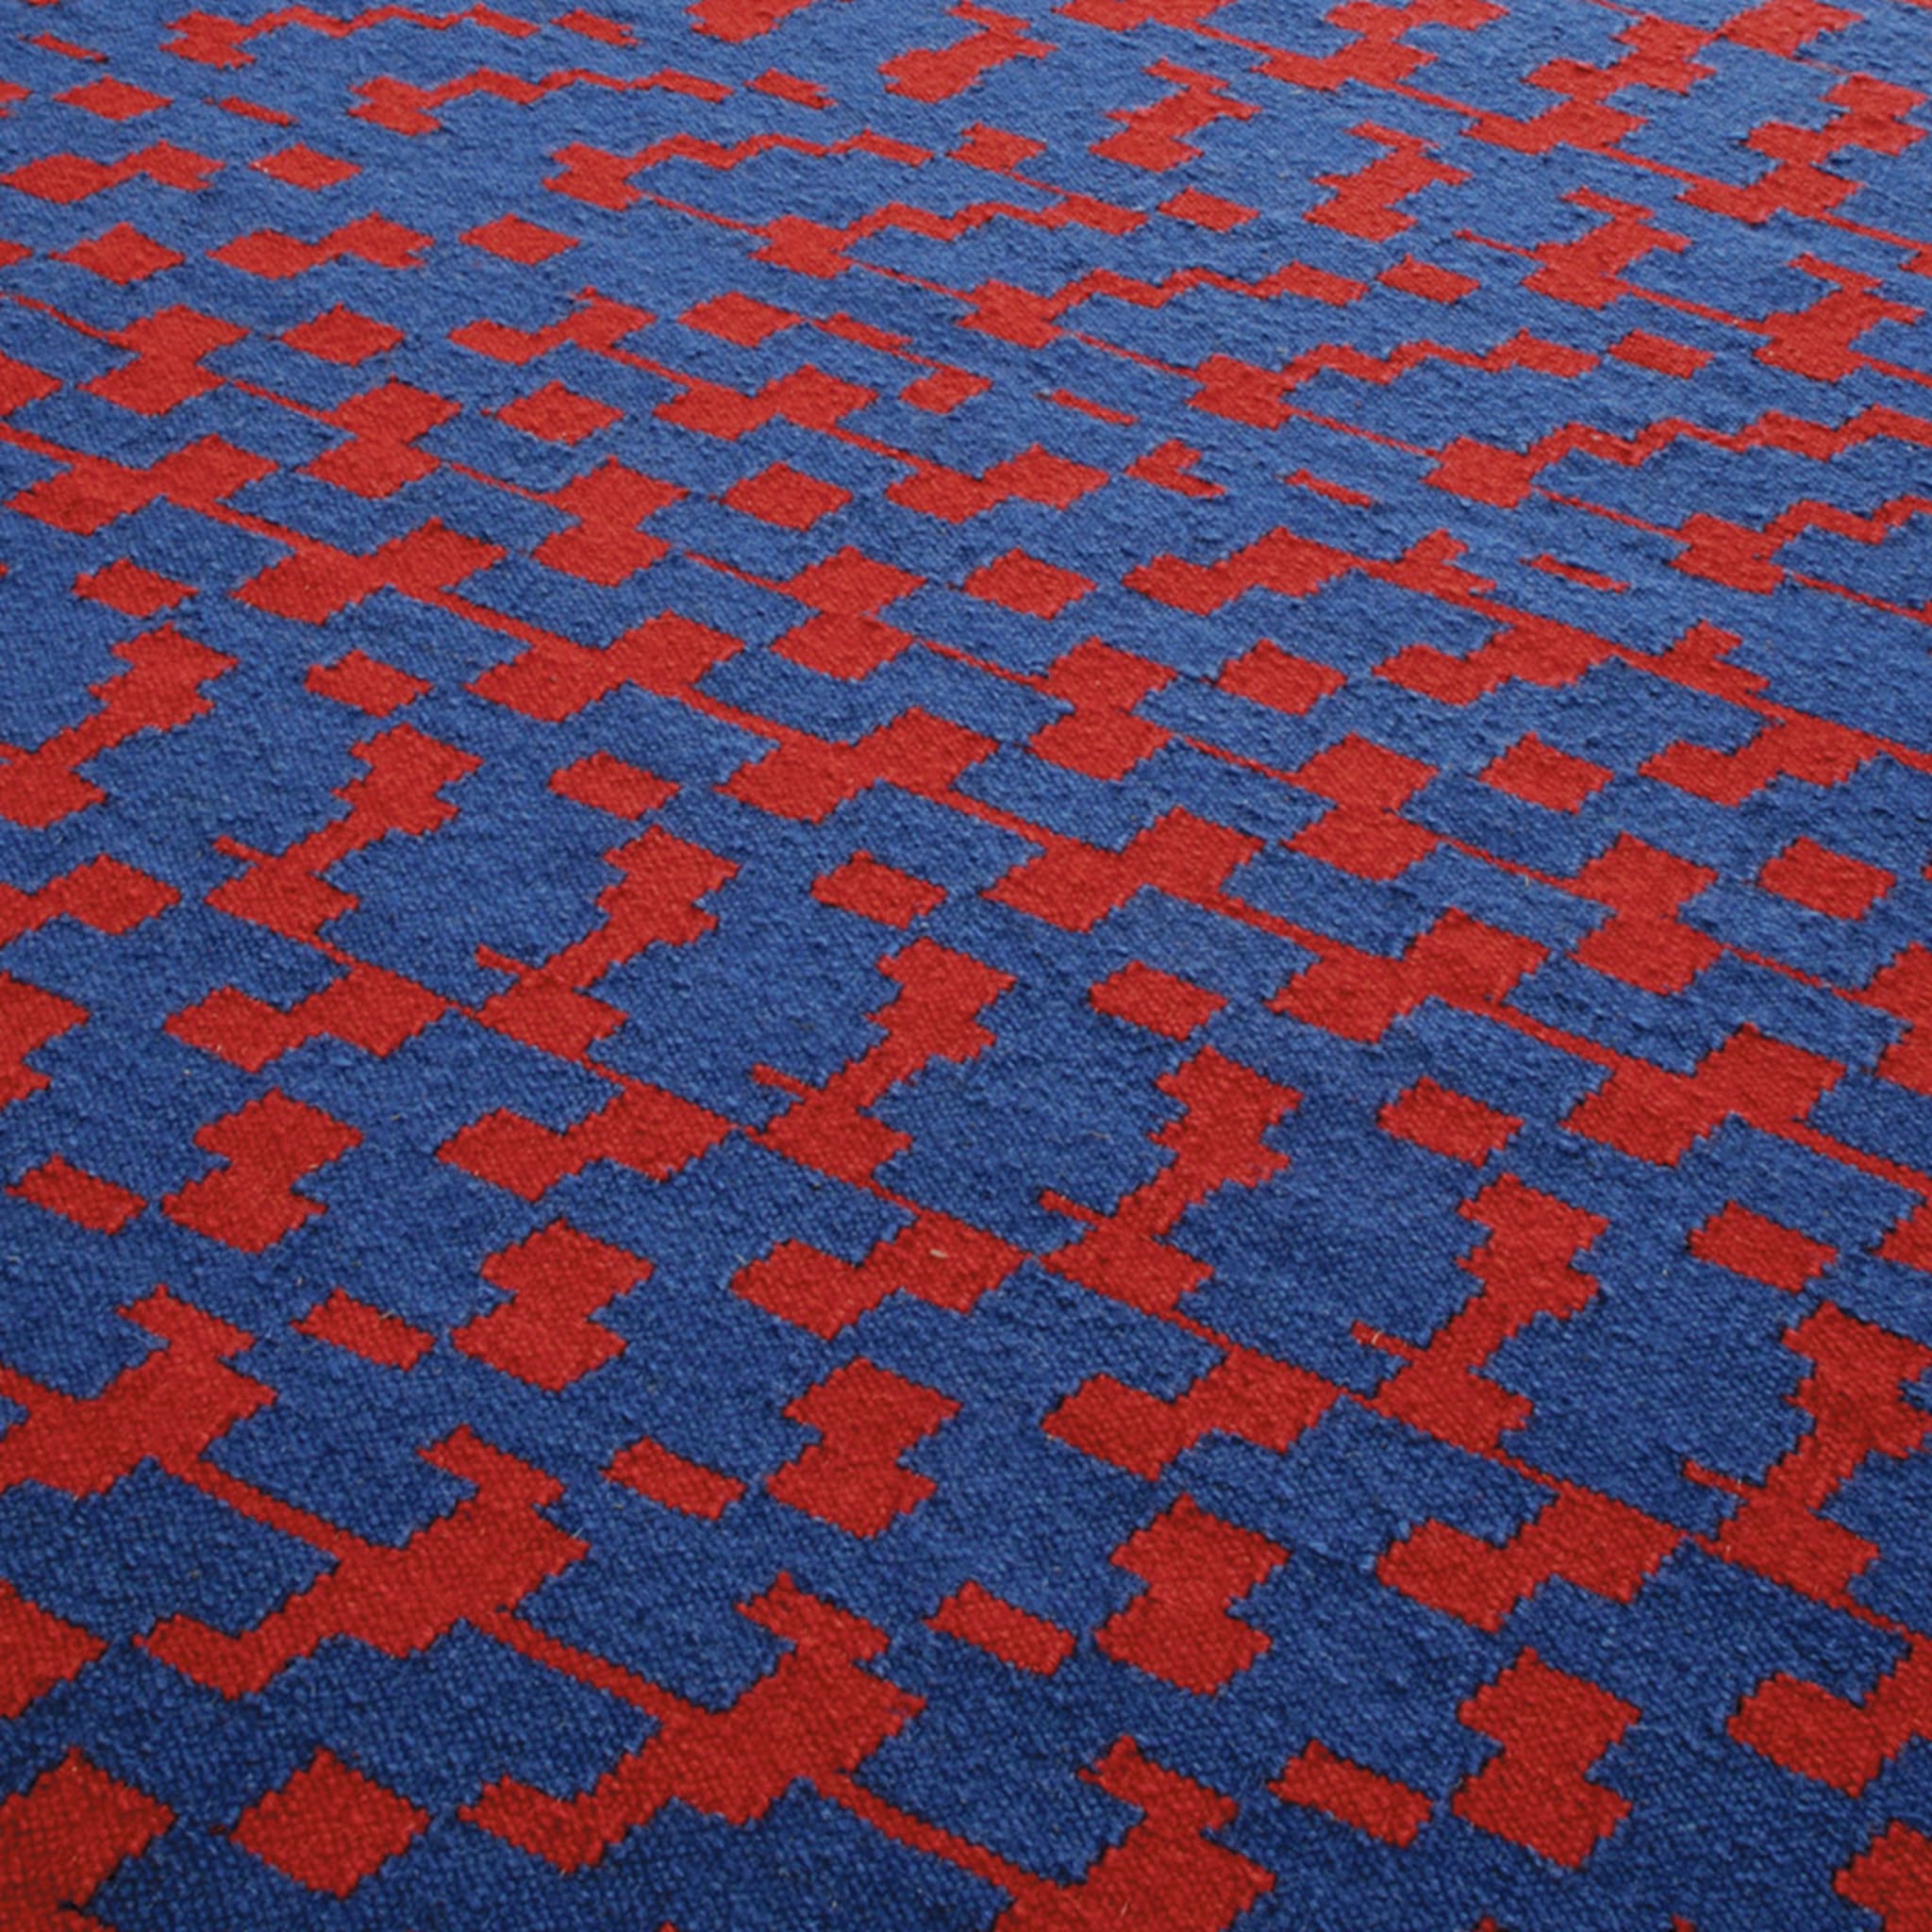 Fuoritempo Large Carpet - Alternative view 2